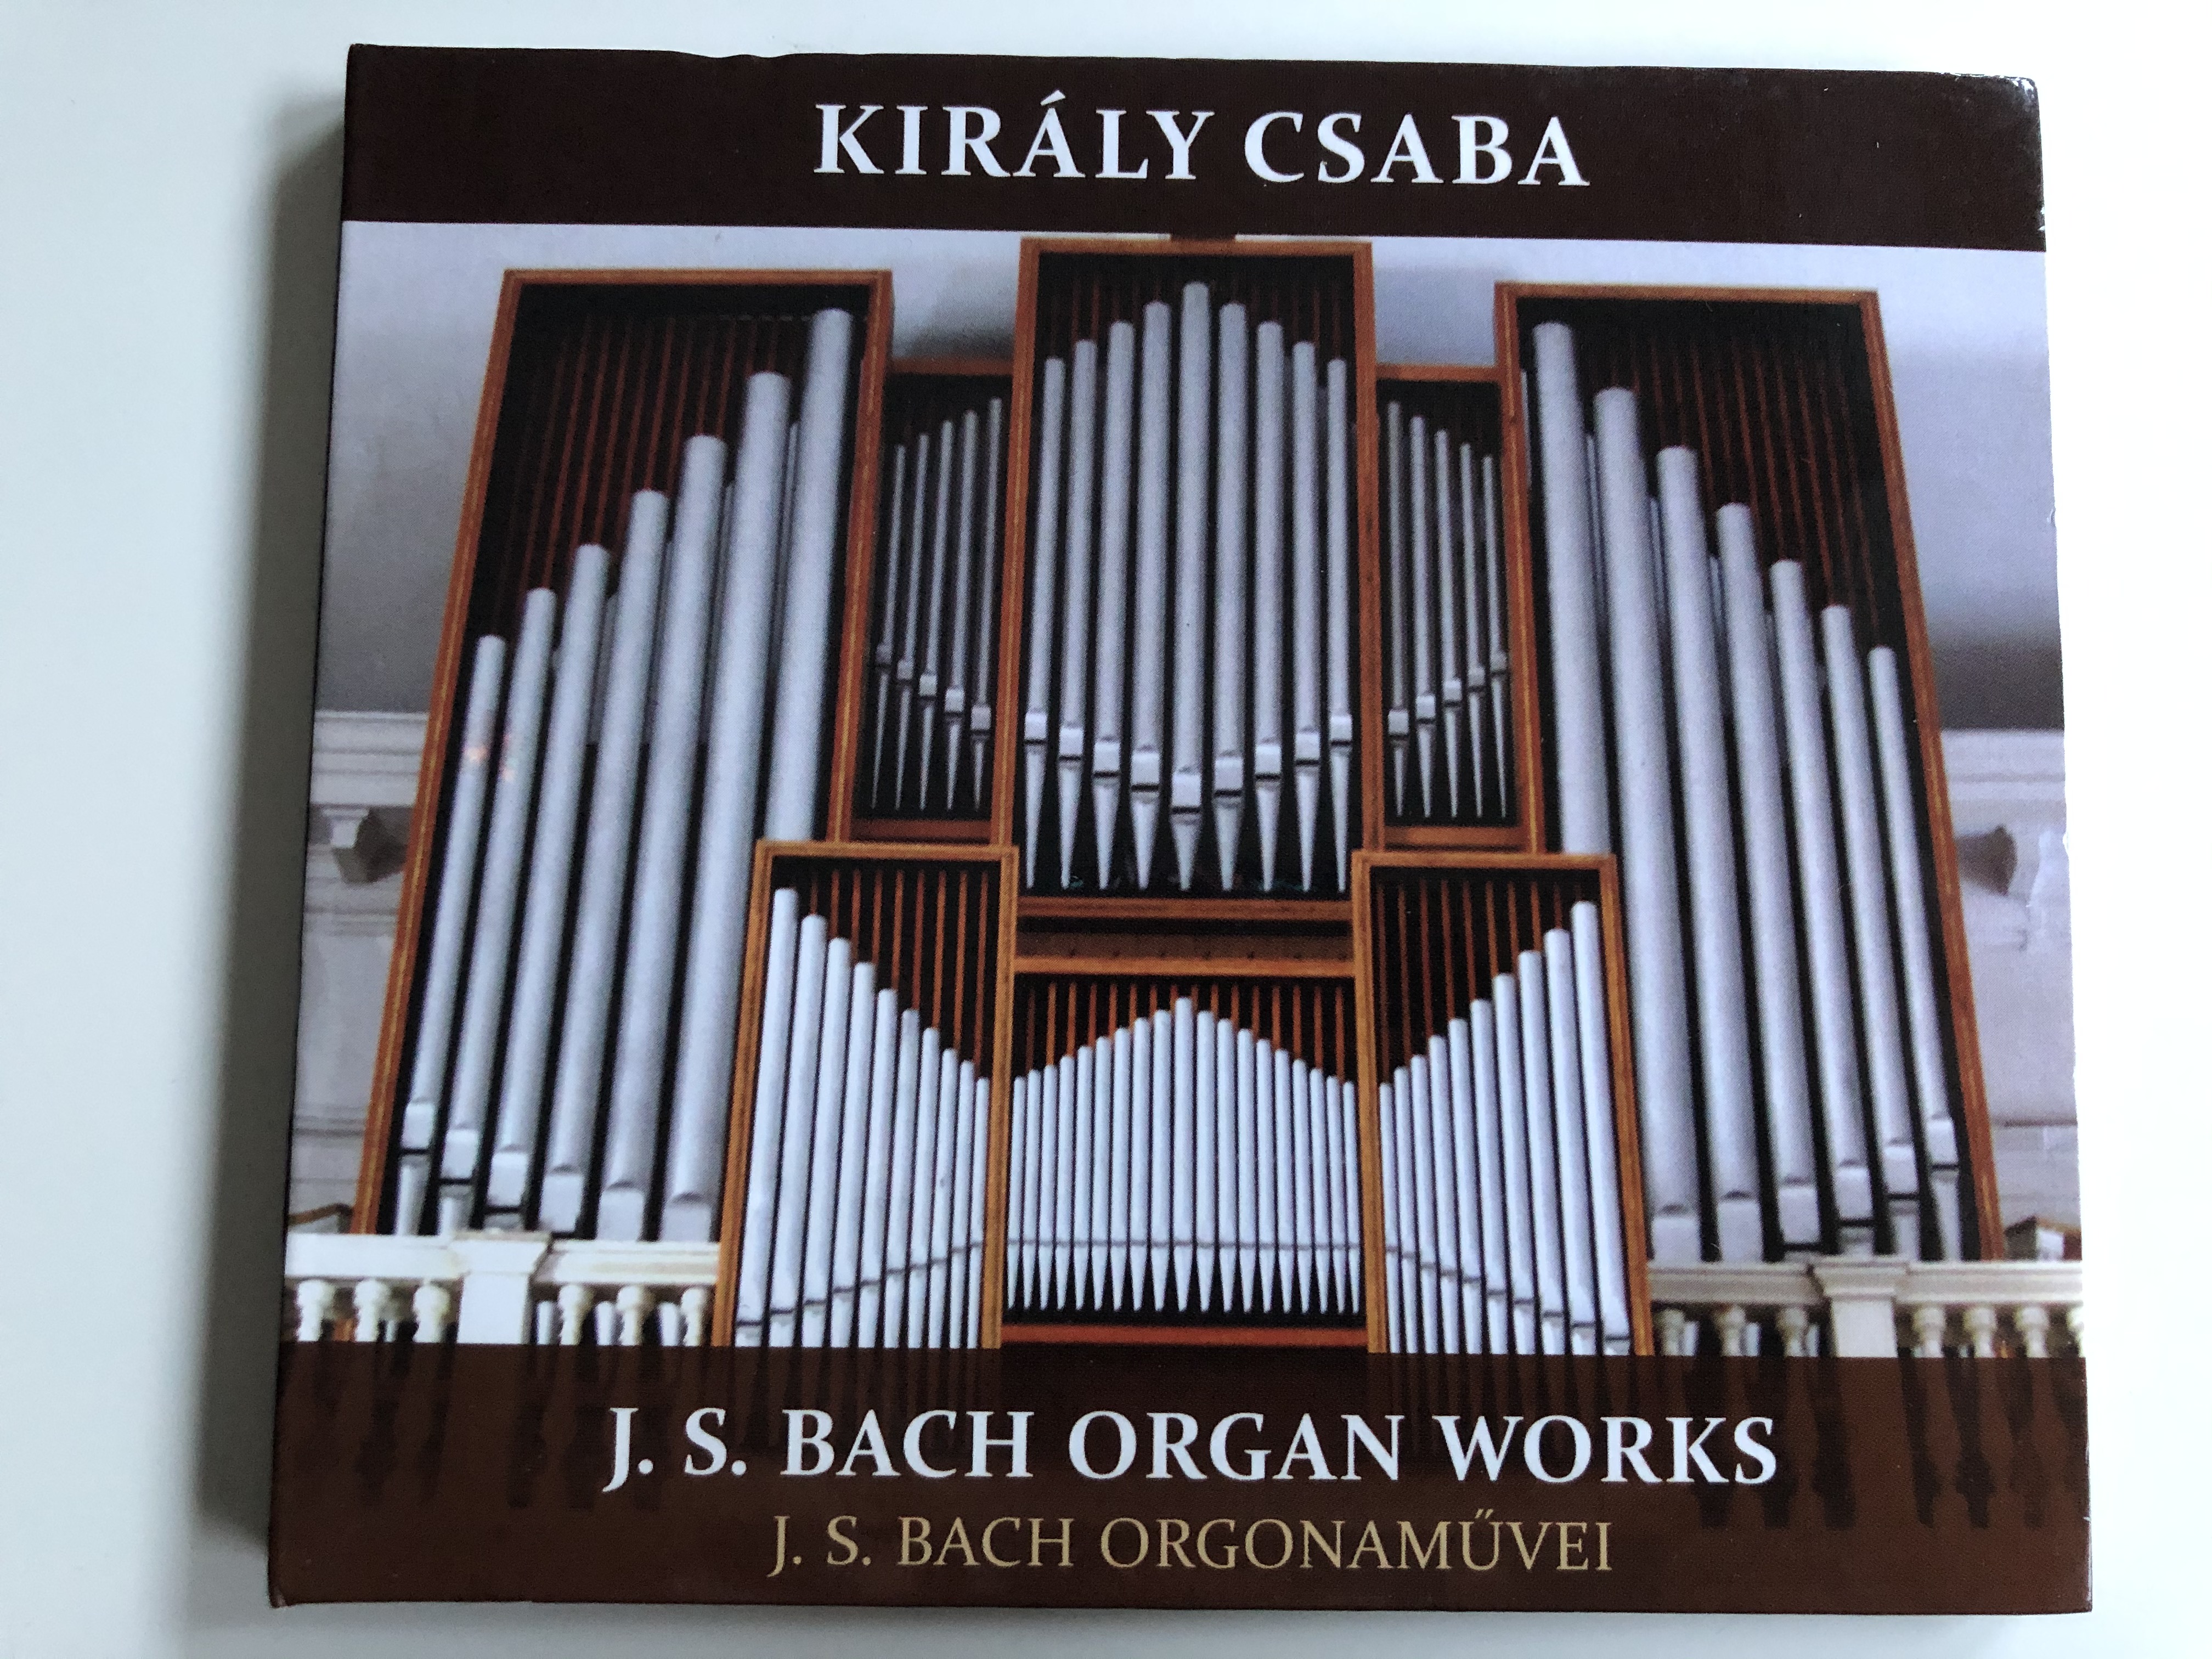 kiraly-csaba-j.-s.-bach-organ-works-masterdisc-audio-cd-2014-stereo-lbcd05-1-.jpg